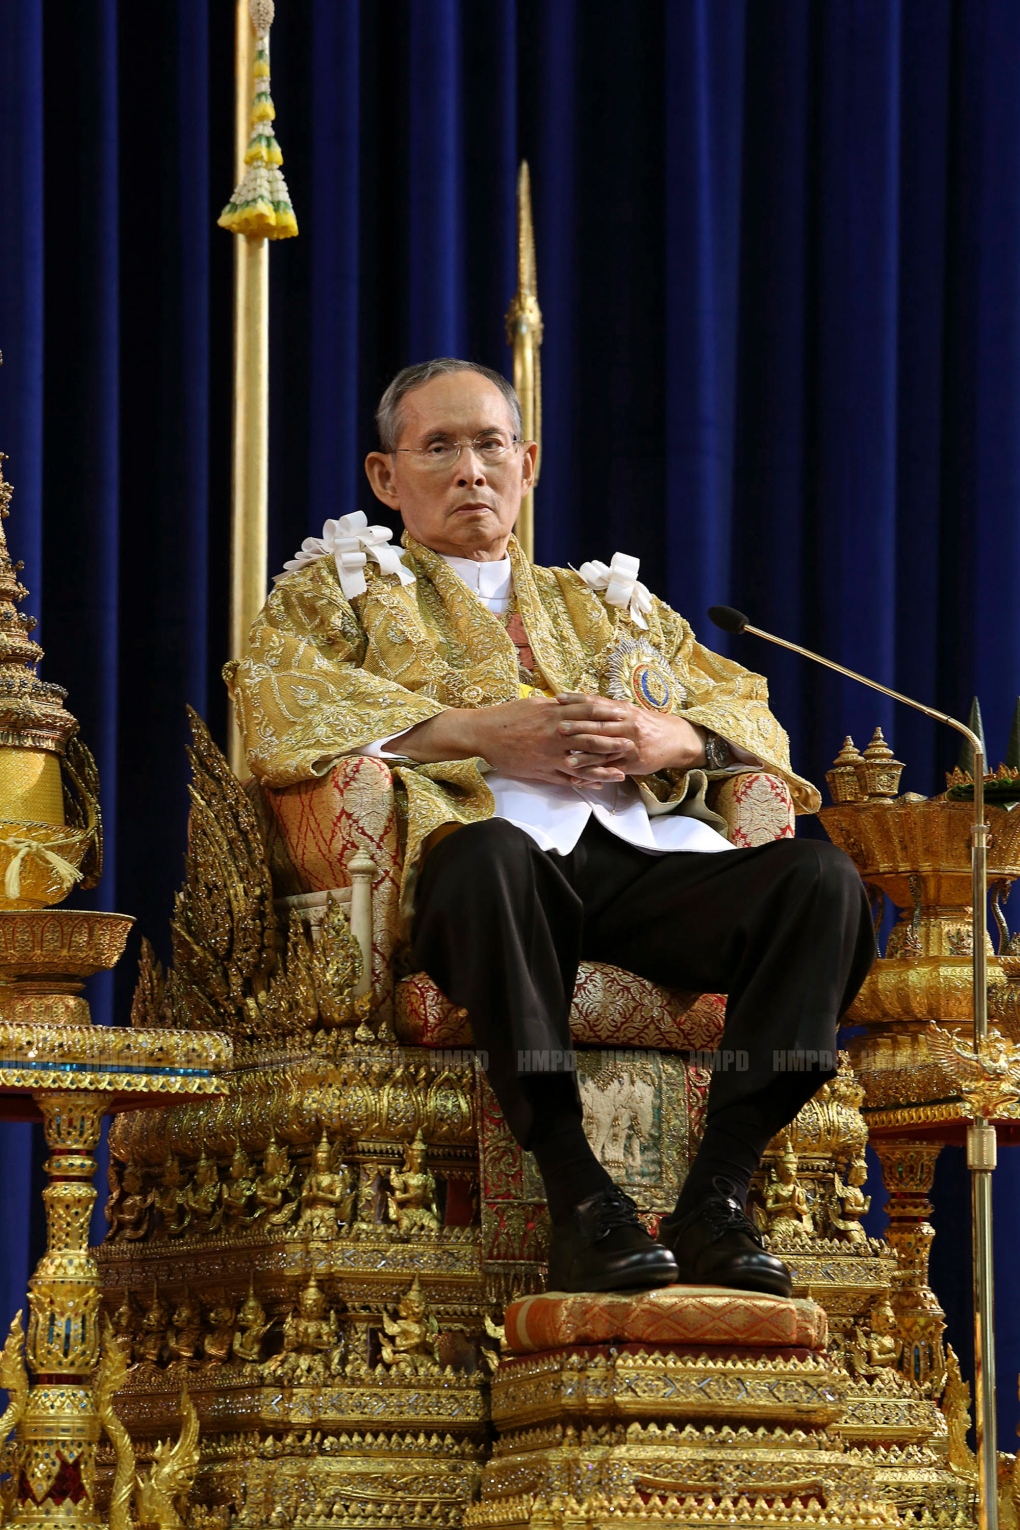 Thailand's King Bhumibol Adulyadej 